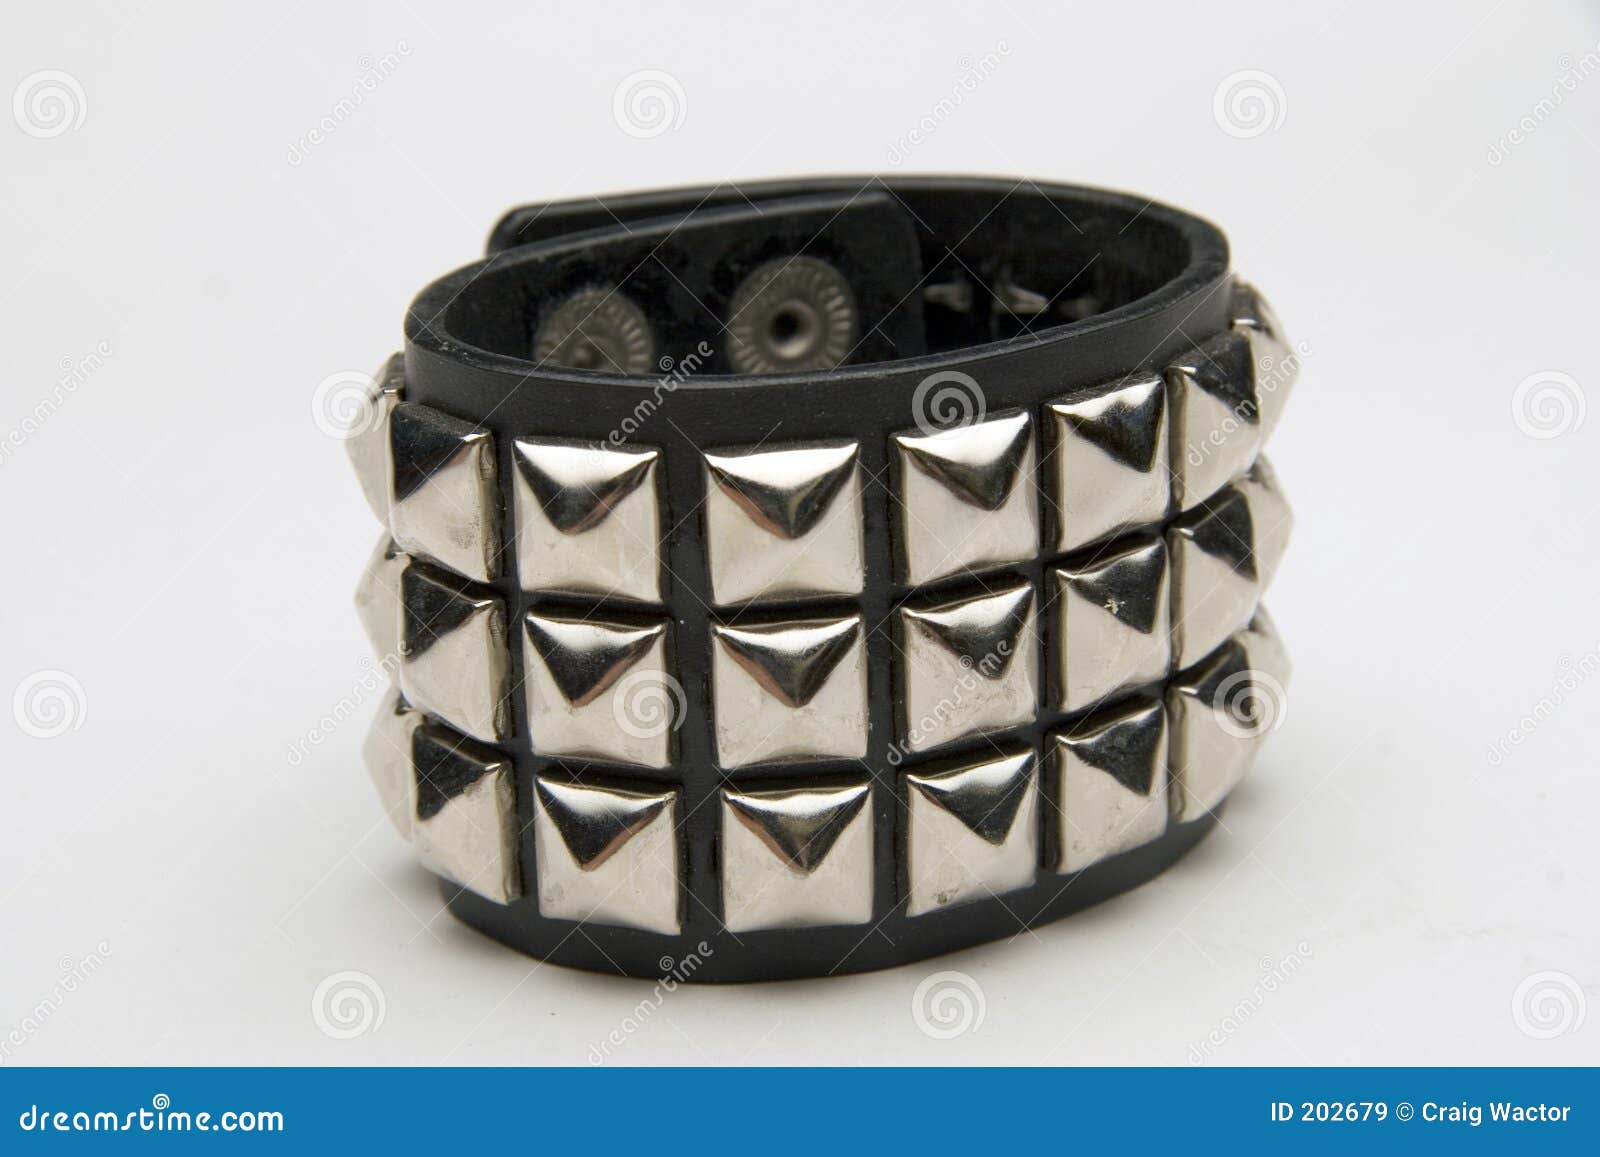 COOLSTEELANDBEYOND Punk Bracelet, Wide Brown Leather Wristband Bracelet  with Skulls and Rivets, Men Women Gothic Rock – COOLSTEELANDBEYOND Jewelry